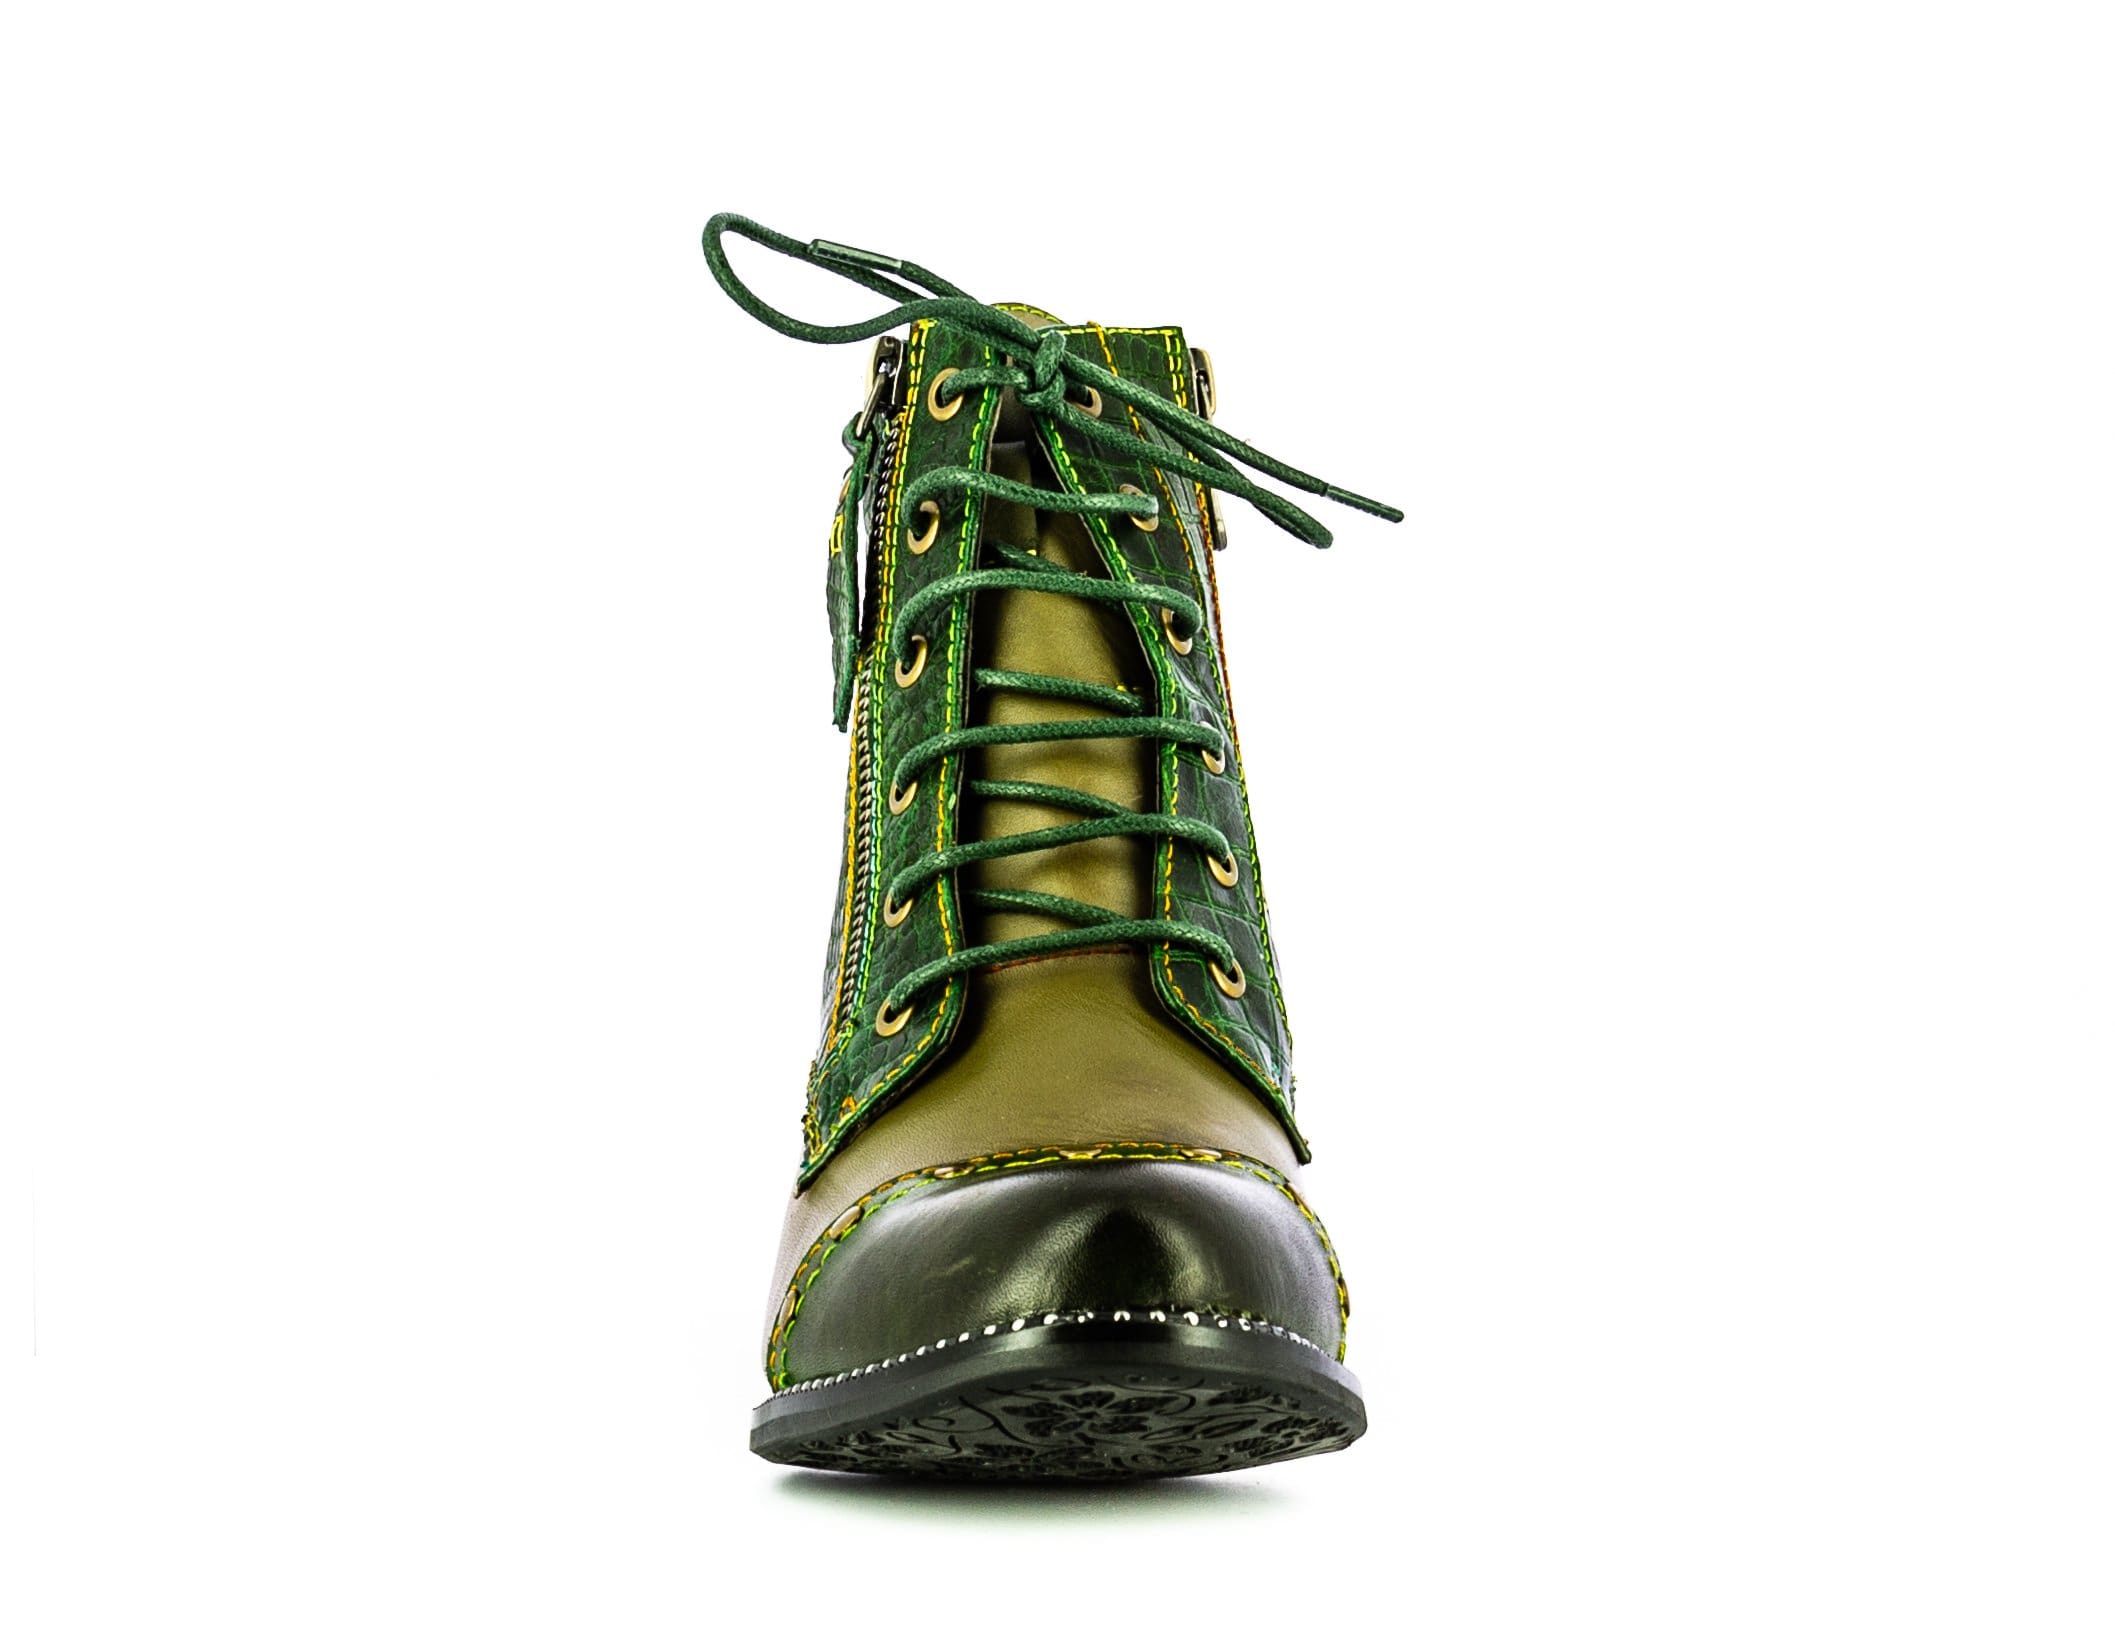 Shoe ALCIZEEO 32 - Boots